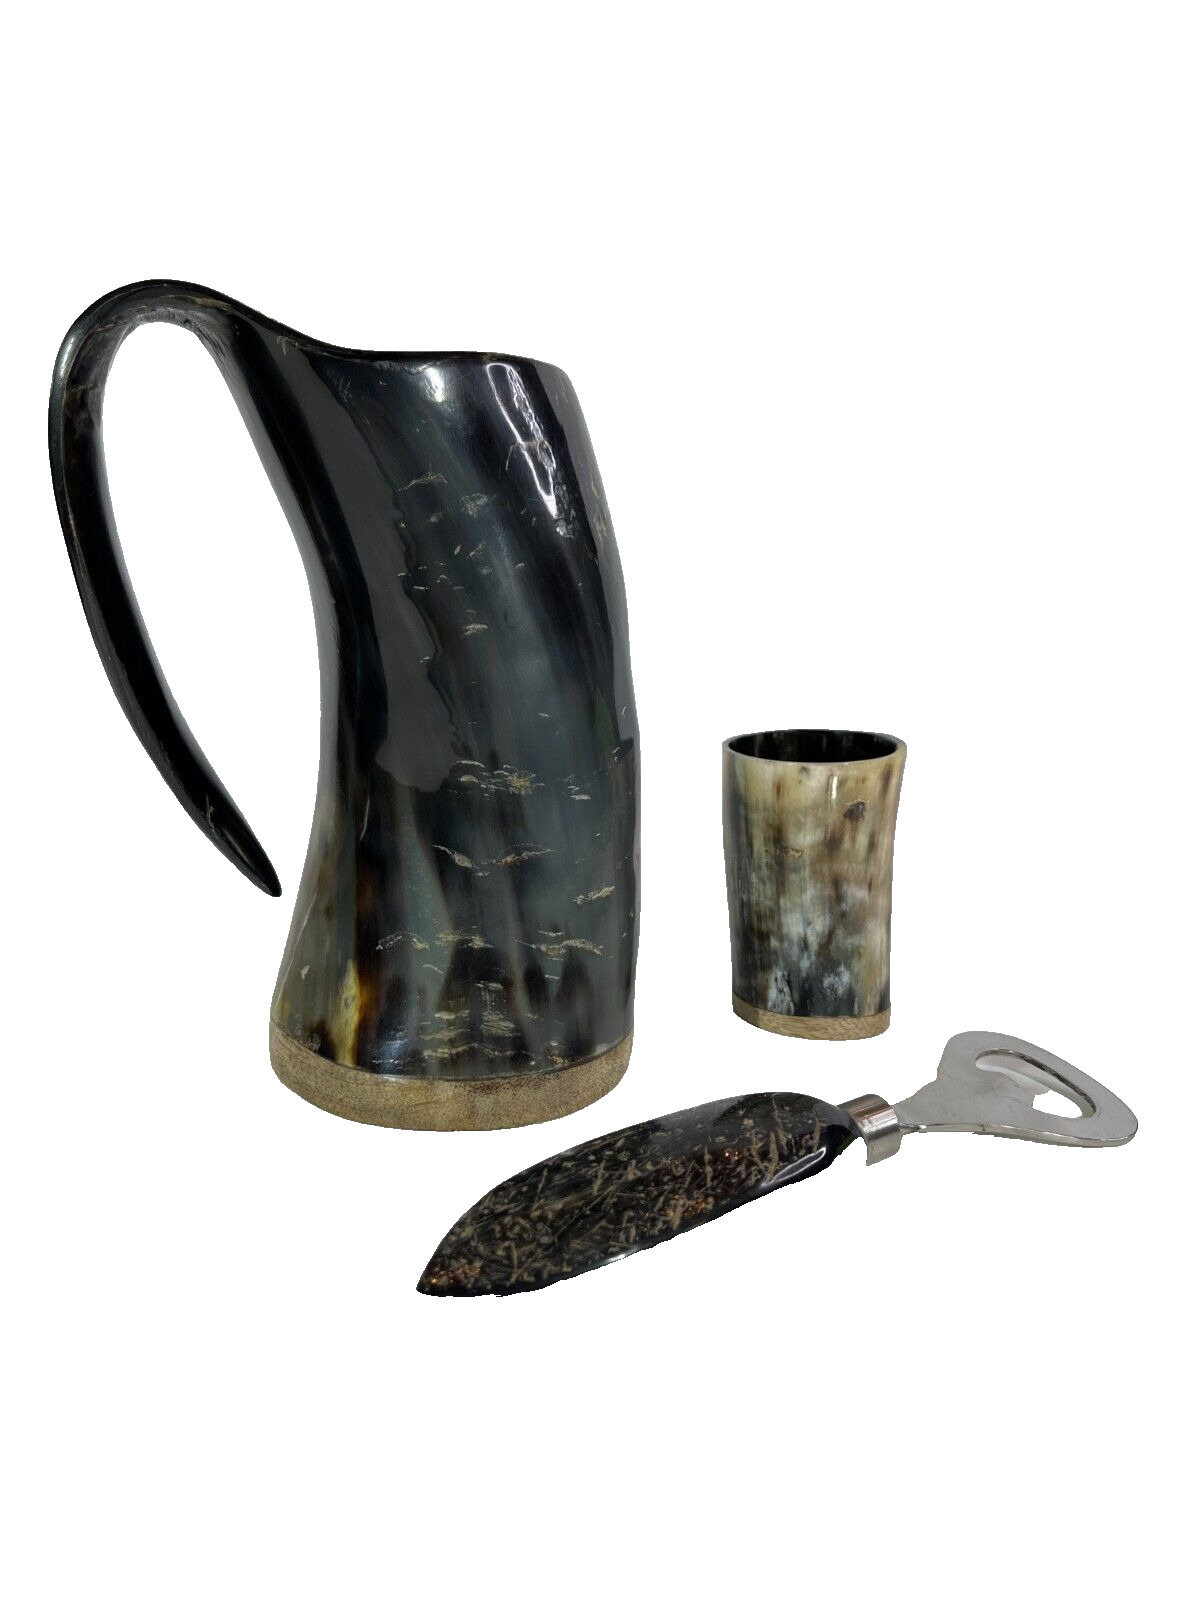 Viking Culture, Ox Horn, Drinking Cup, Shot glass, Bottle opener, Bag, Ale/Beer